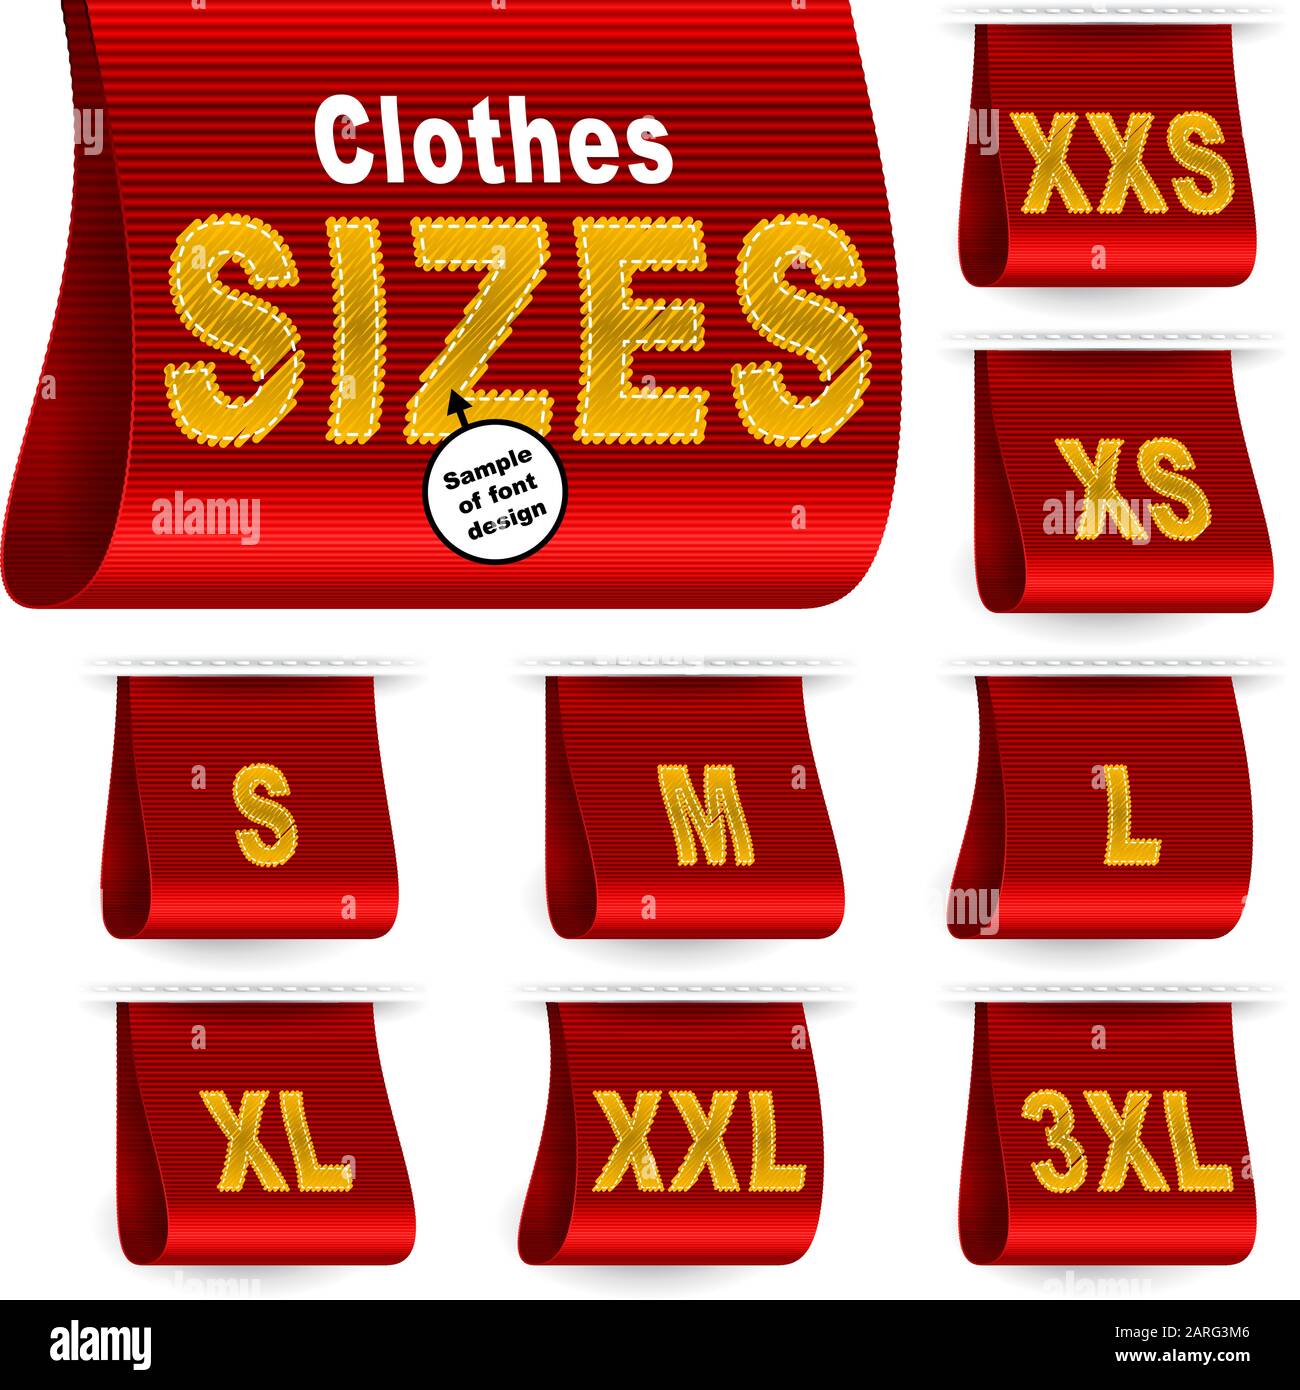 clothes xxl size